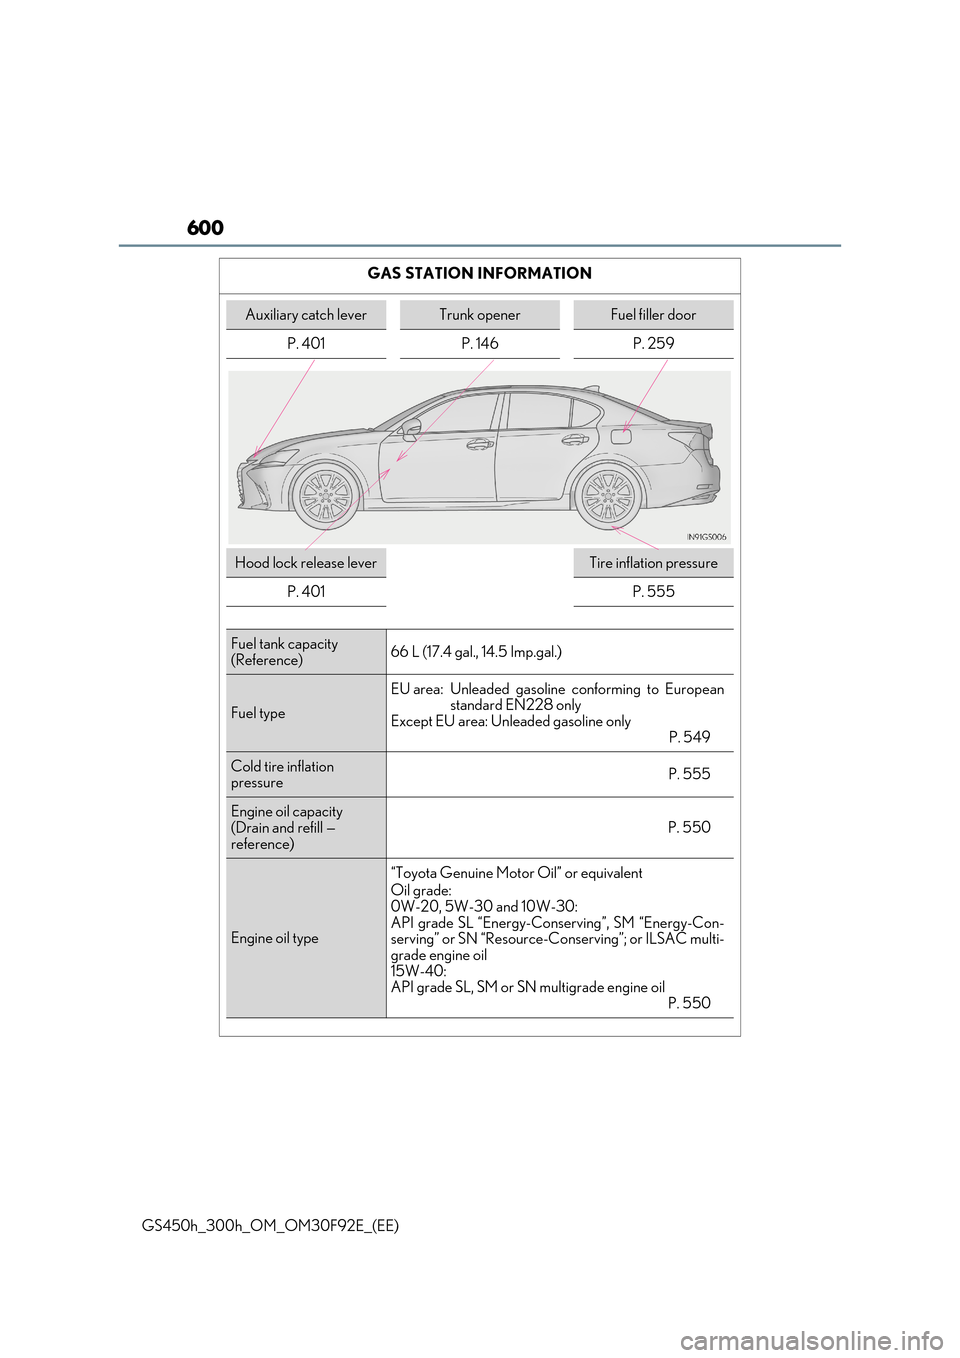 Lexus GS450h 2017  Owners Manual 600
GS450h_300h_OM_OM30F92E_(EE) 
GAS STATION INFORMATION
Auxiliary catch leverTrunk openerFuel filler door 
P. 401 P. 146 P. 259
Hood lock release leverTire inflation pressure
P. 401P. 555
Fuel tank 